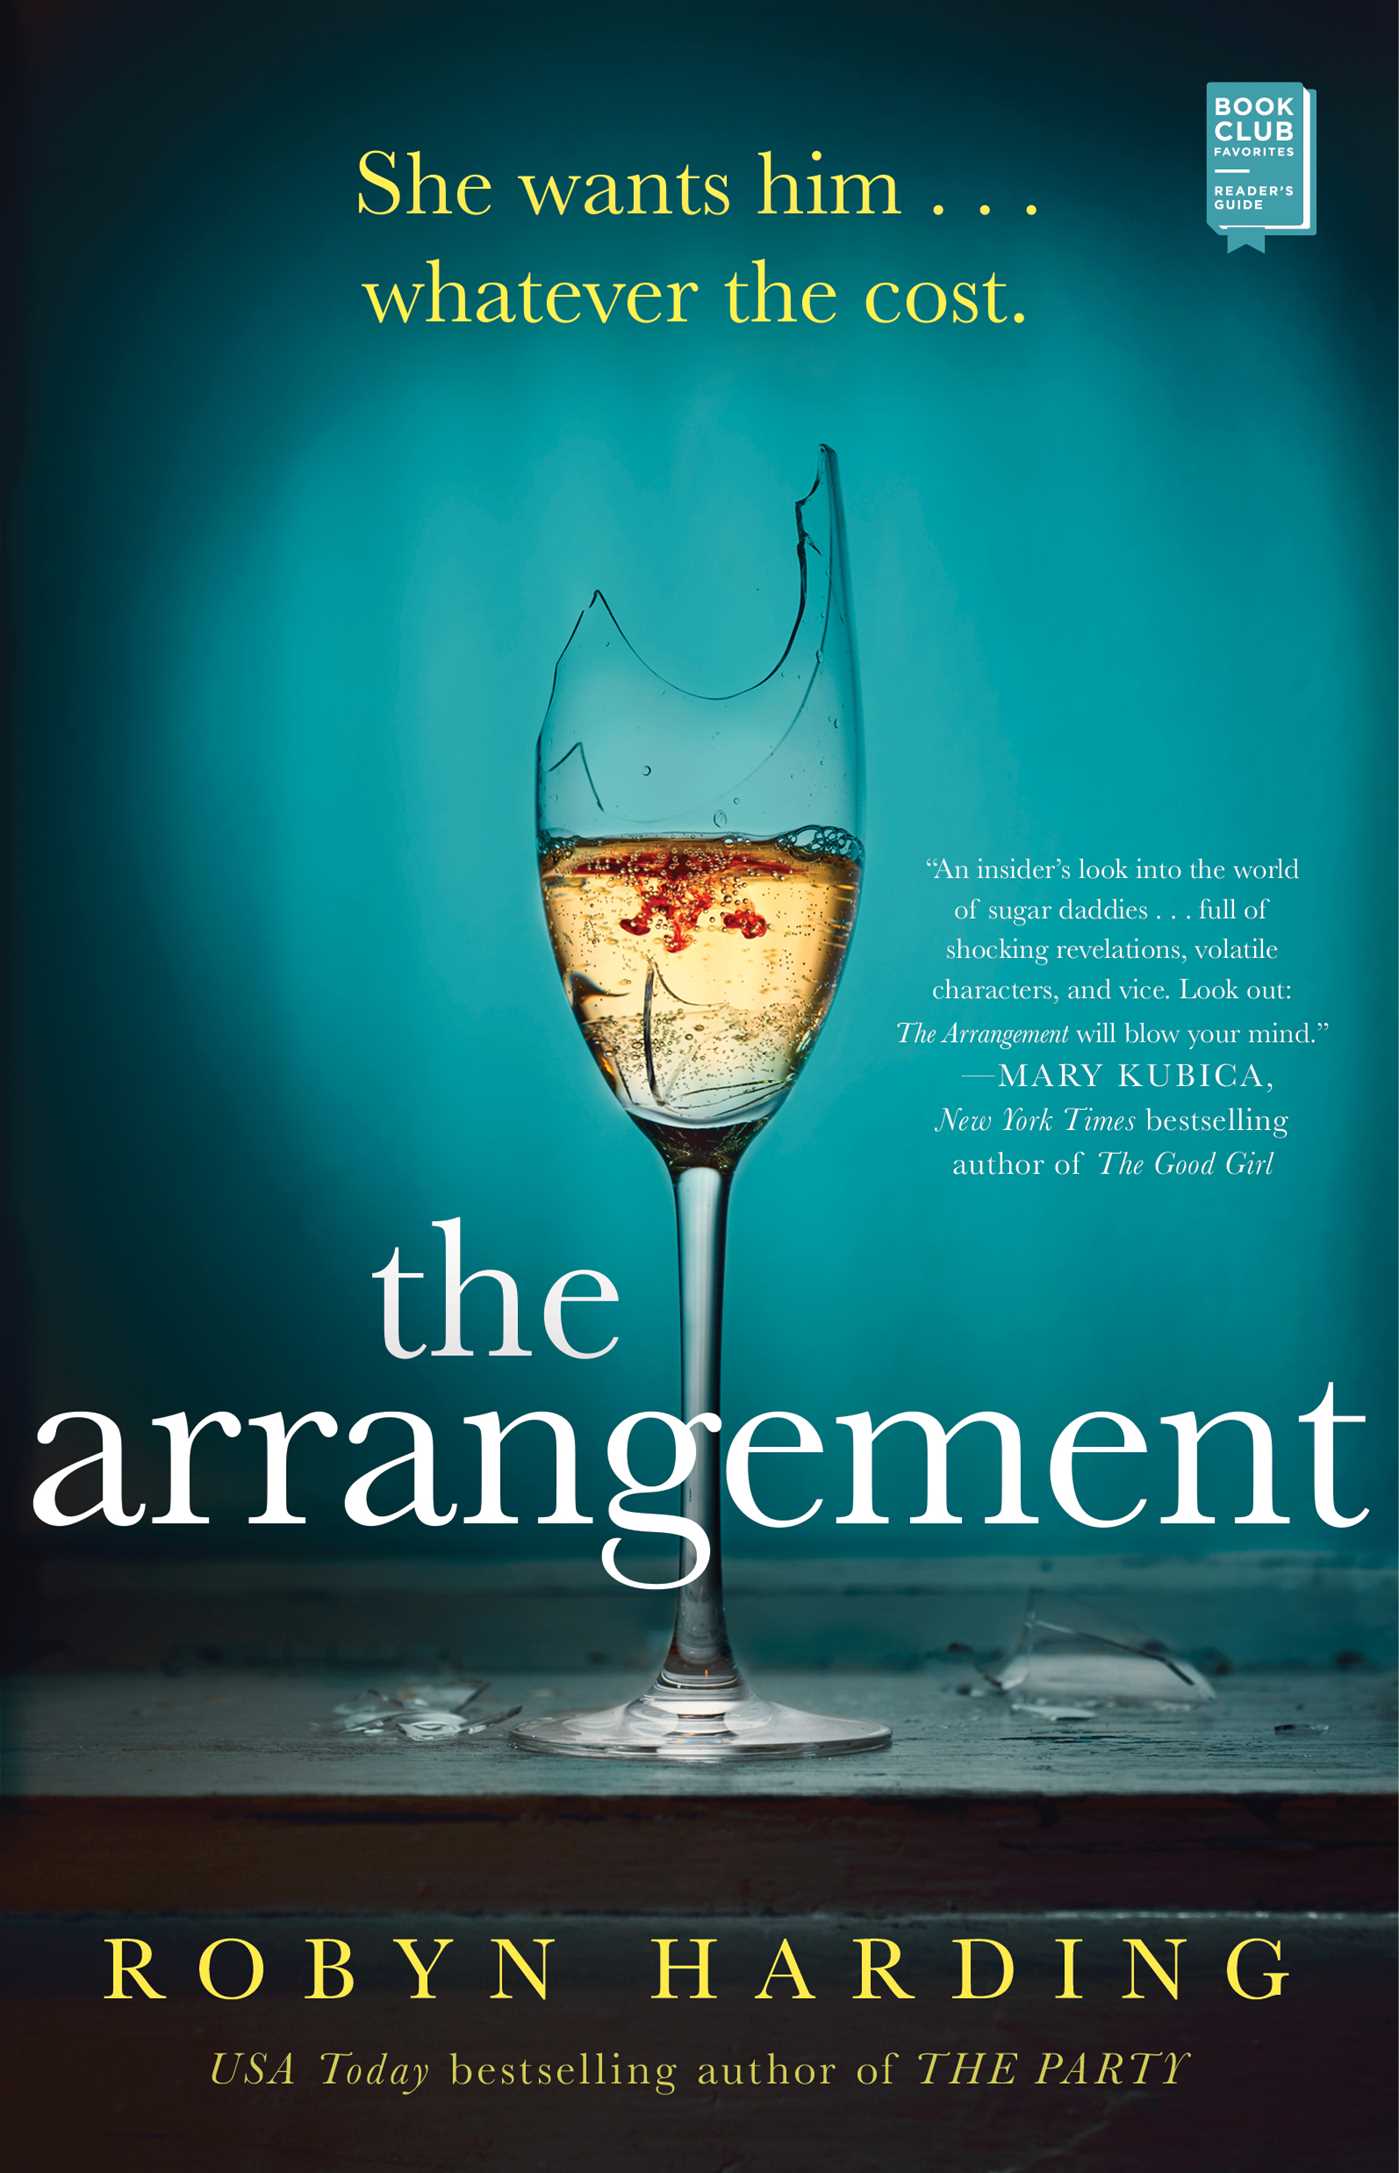 The Arrangement cover image